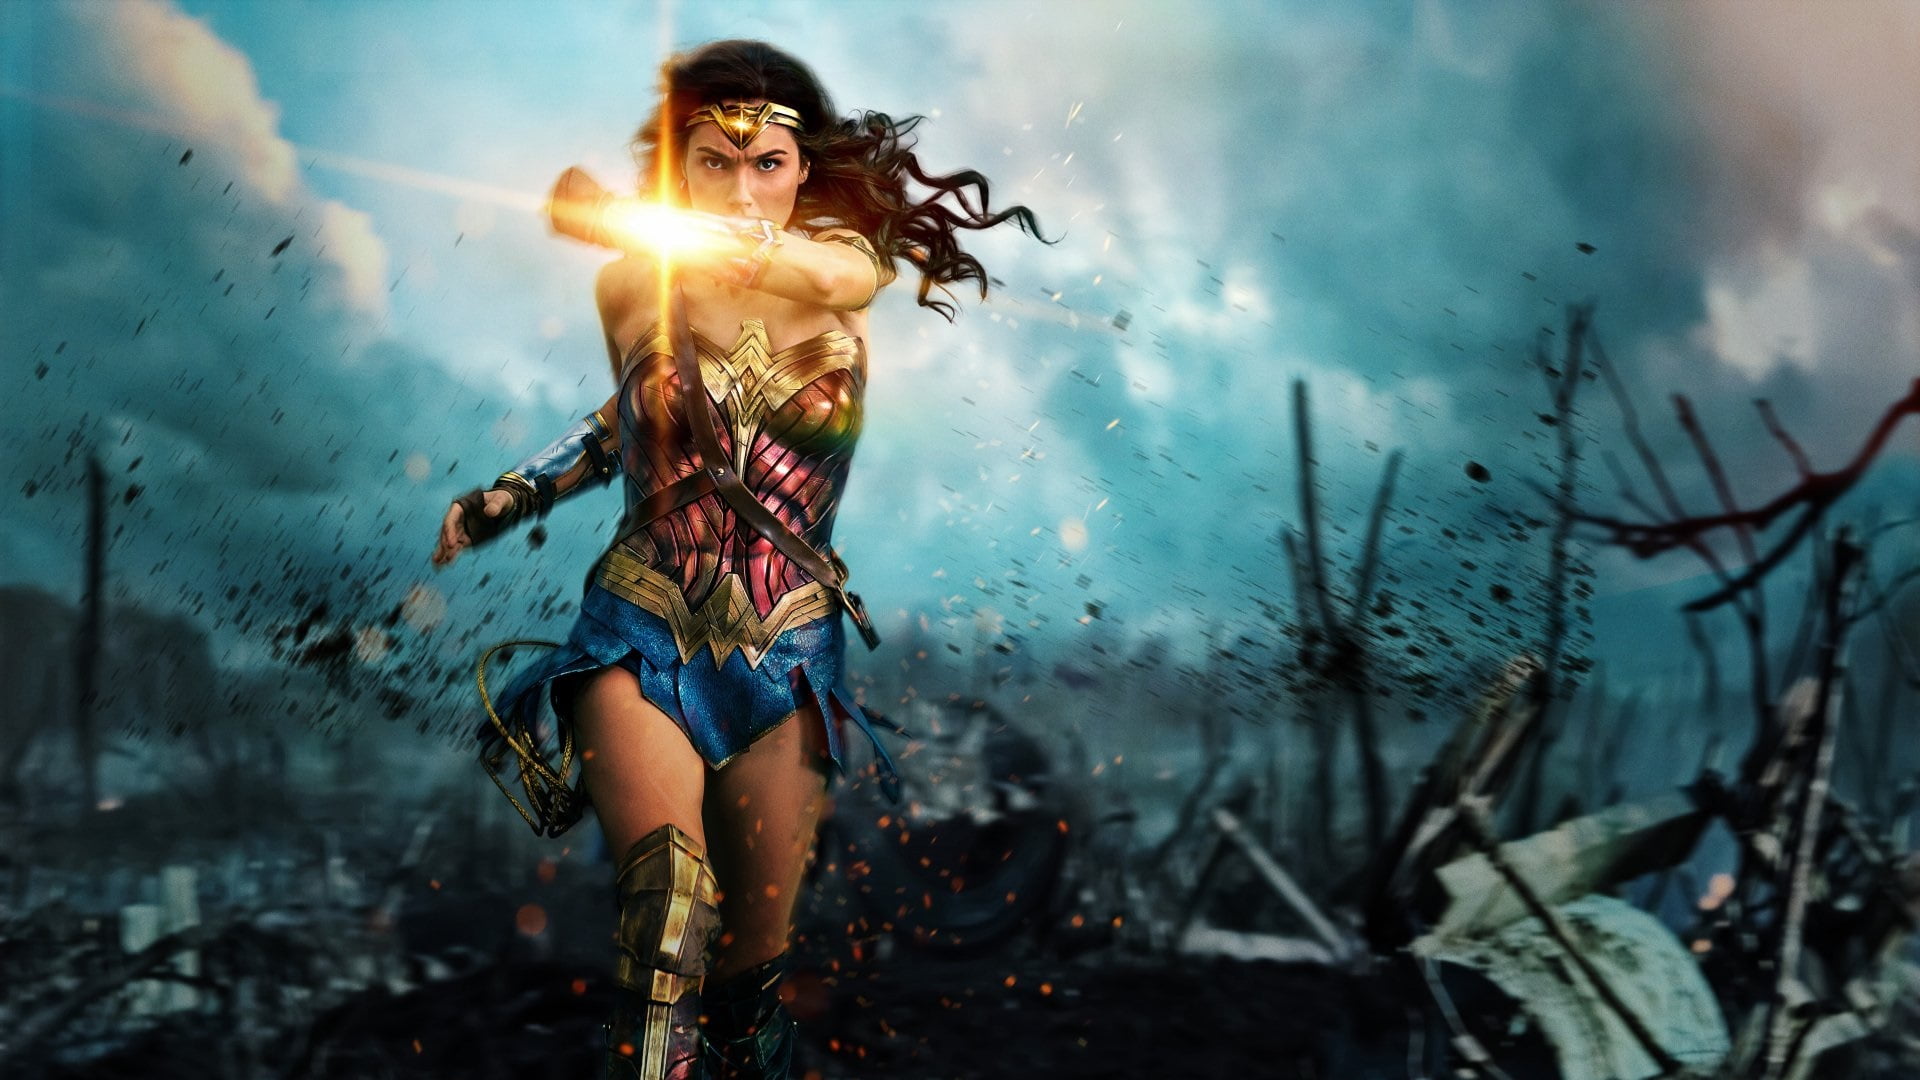 Wonder Woman movie scene, Gal Gadot, women, movies, superheroines